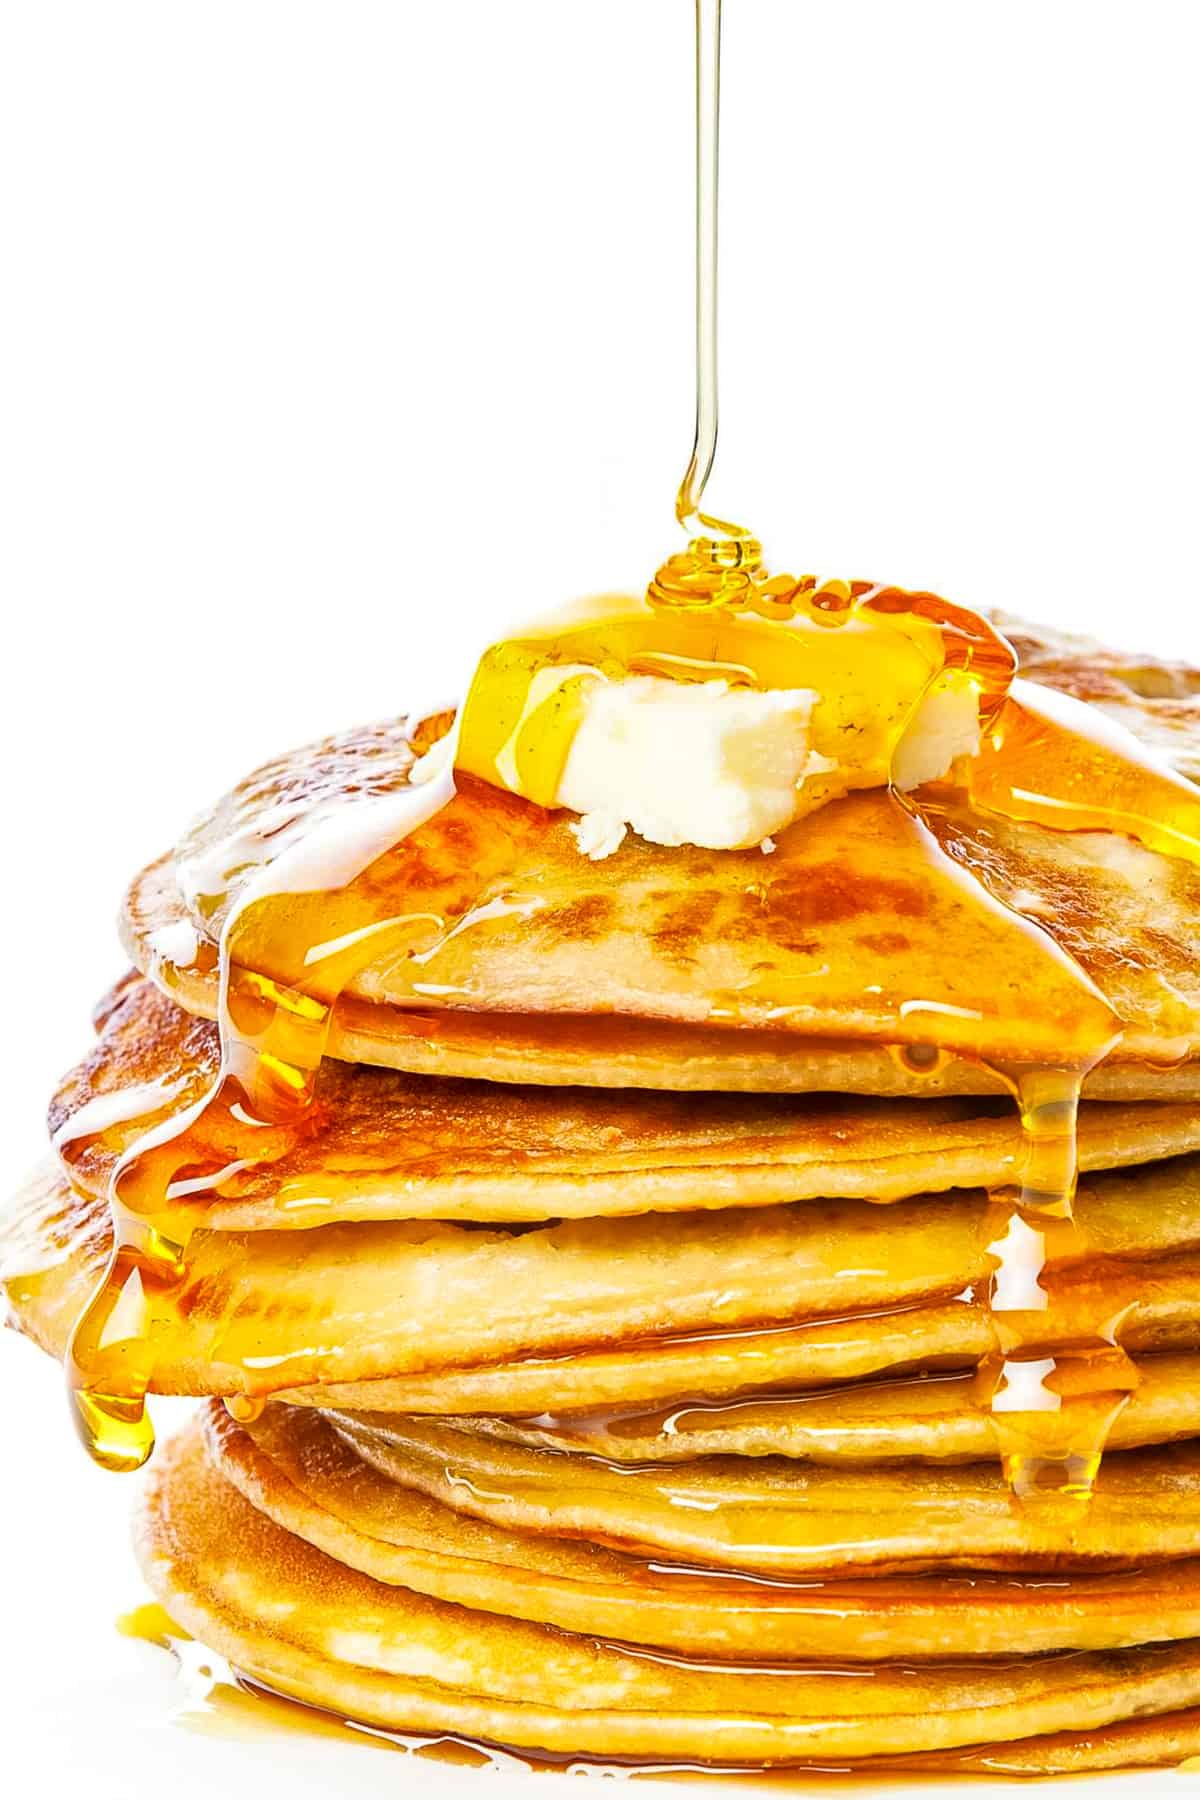 Oat Flour Pancakes- Just 5 Ingredients! - The Big Man's World ®